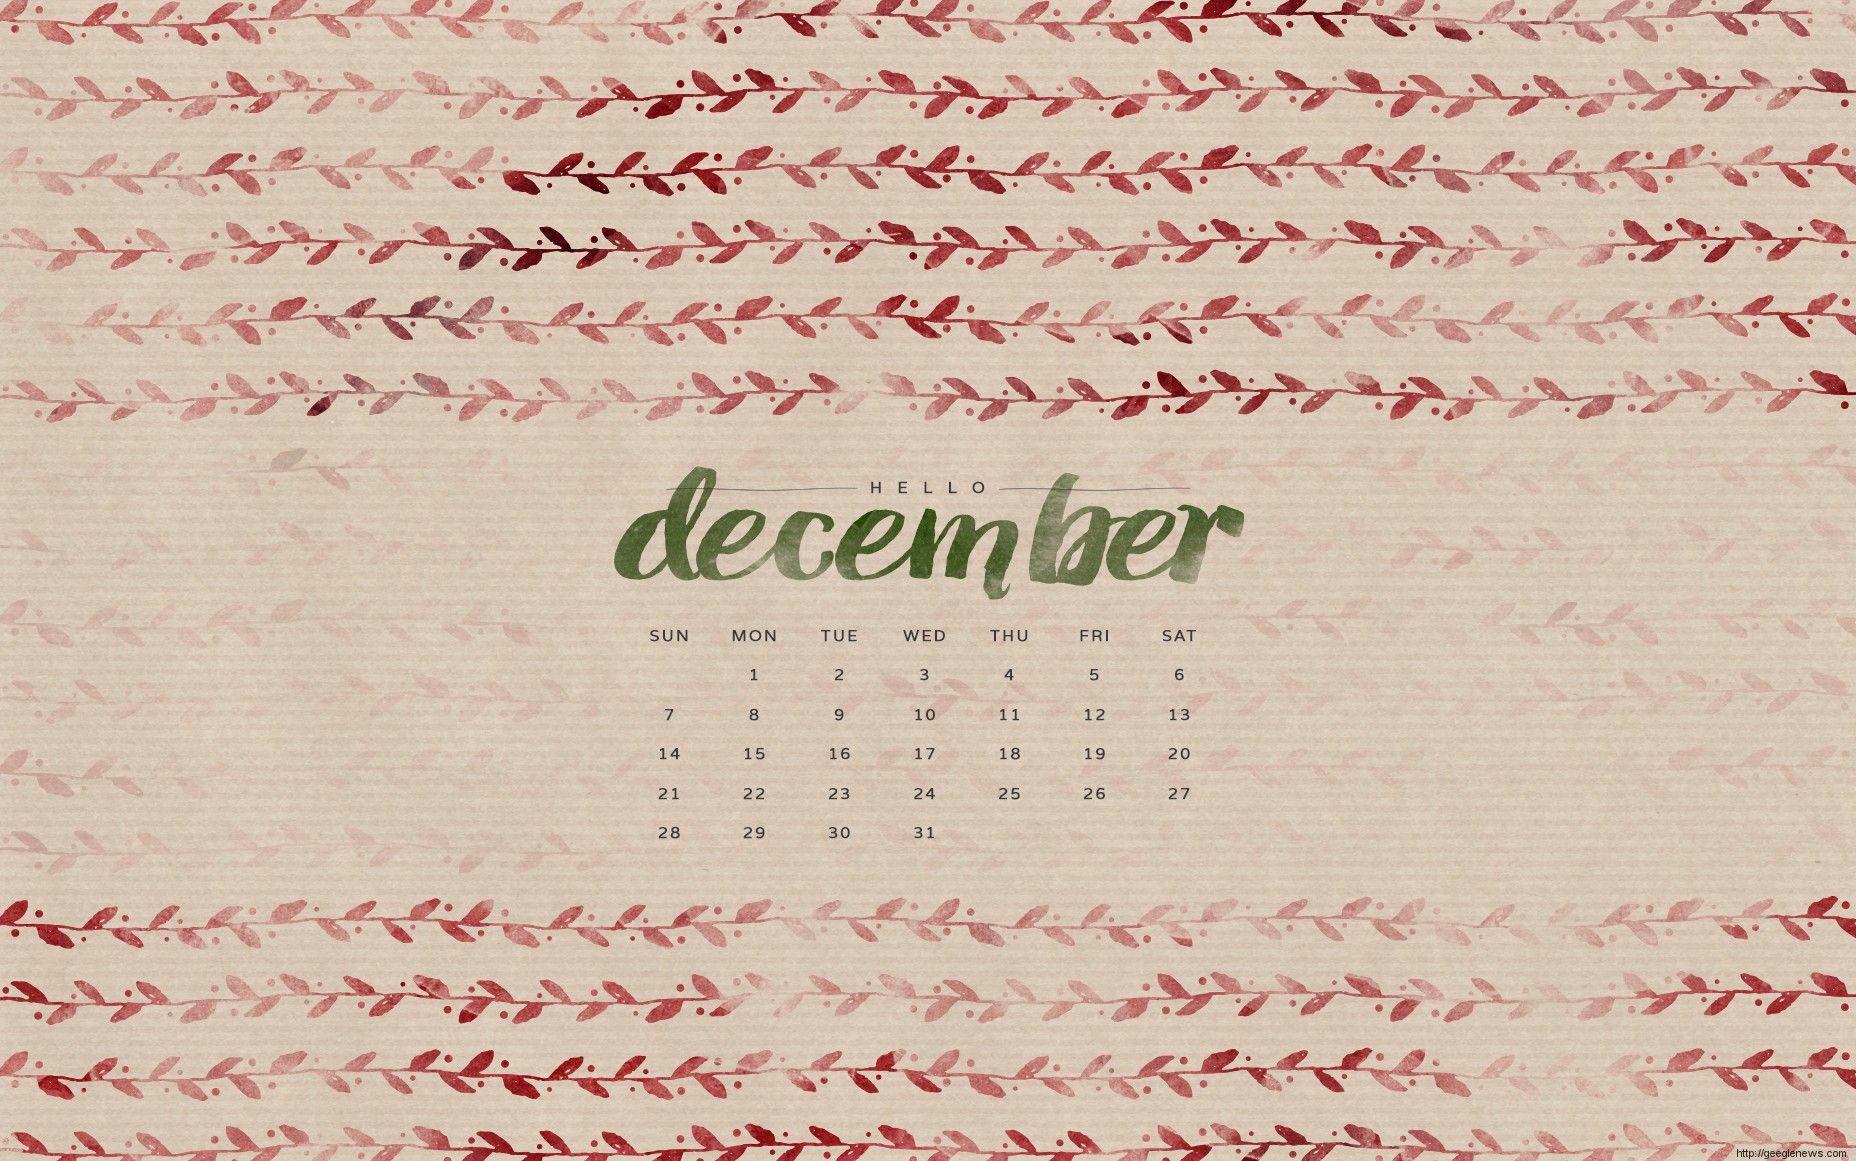 Image Gallery of December Calendar 2017 Wallpaper